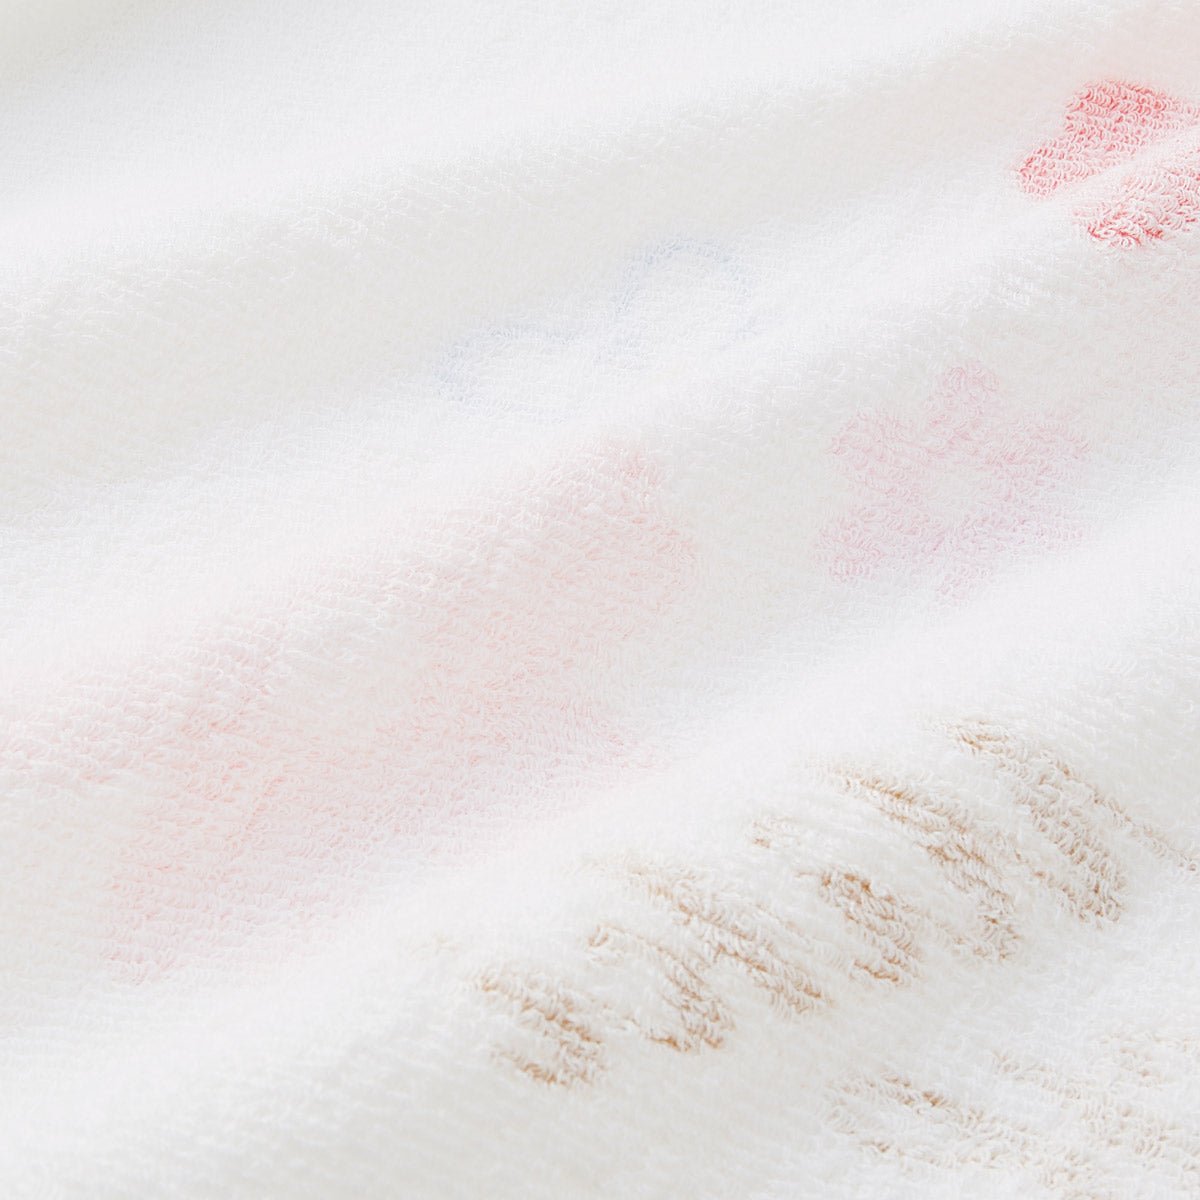 Miki House height-chart cotton bath towel - White